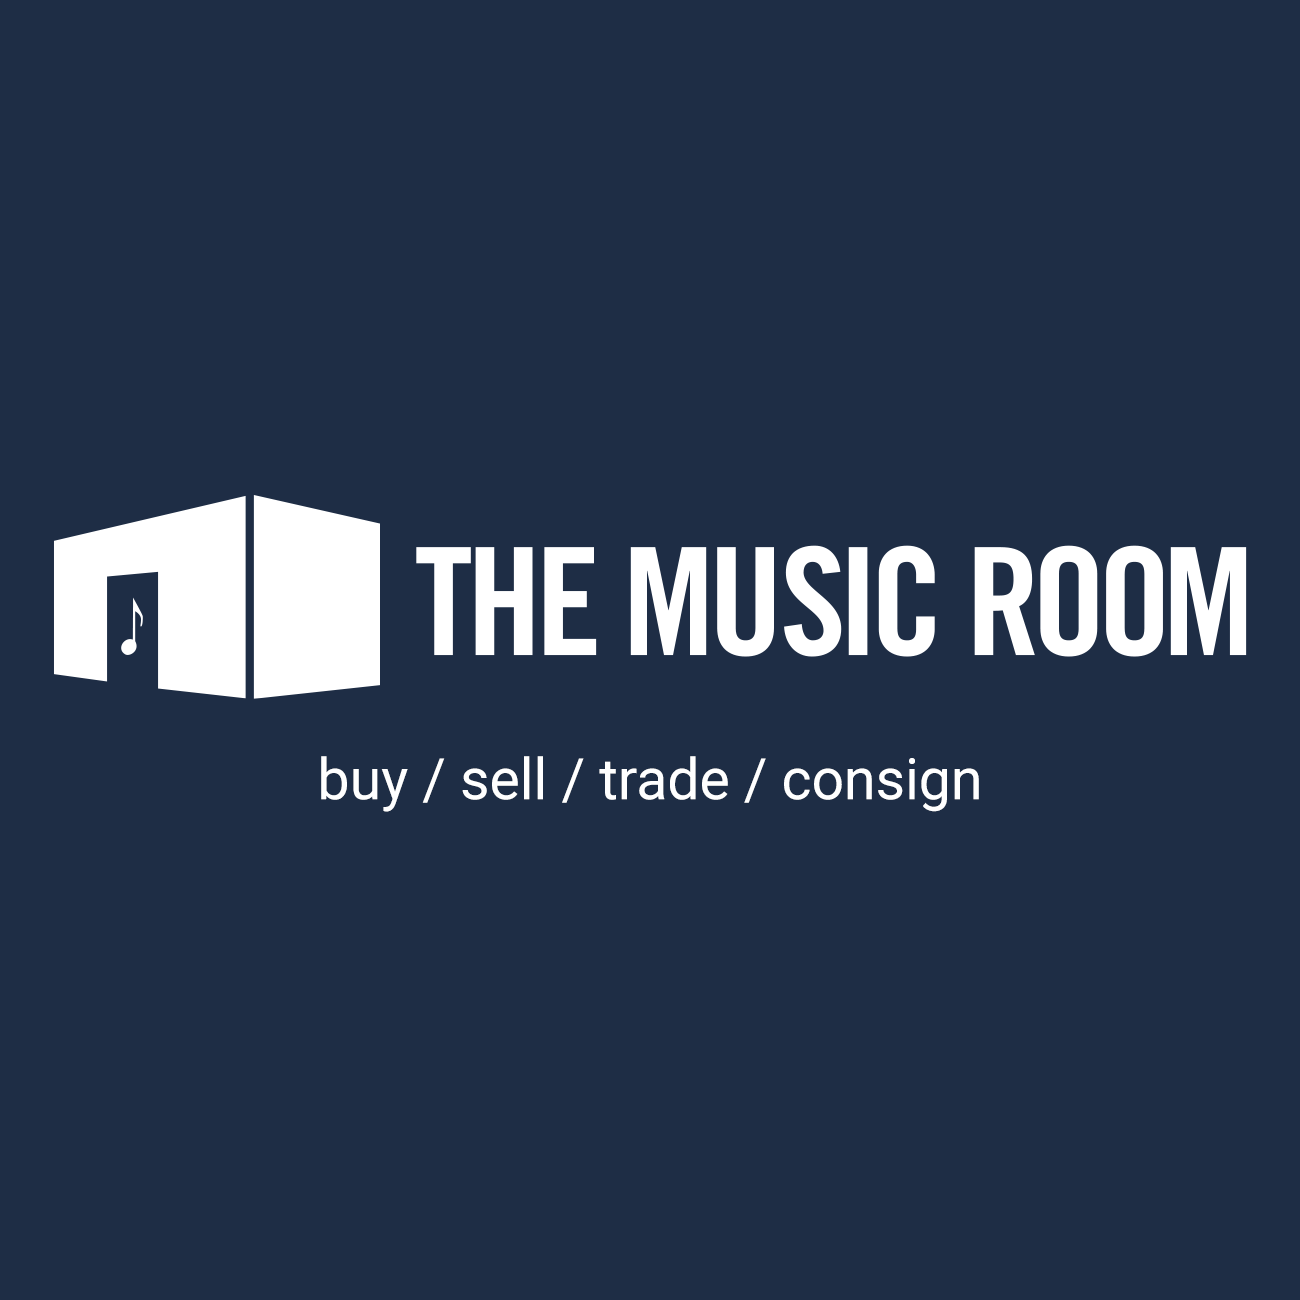 The Music Room (tmraudio.com)